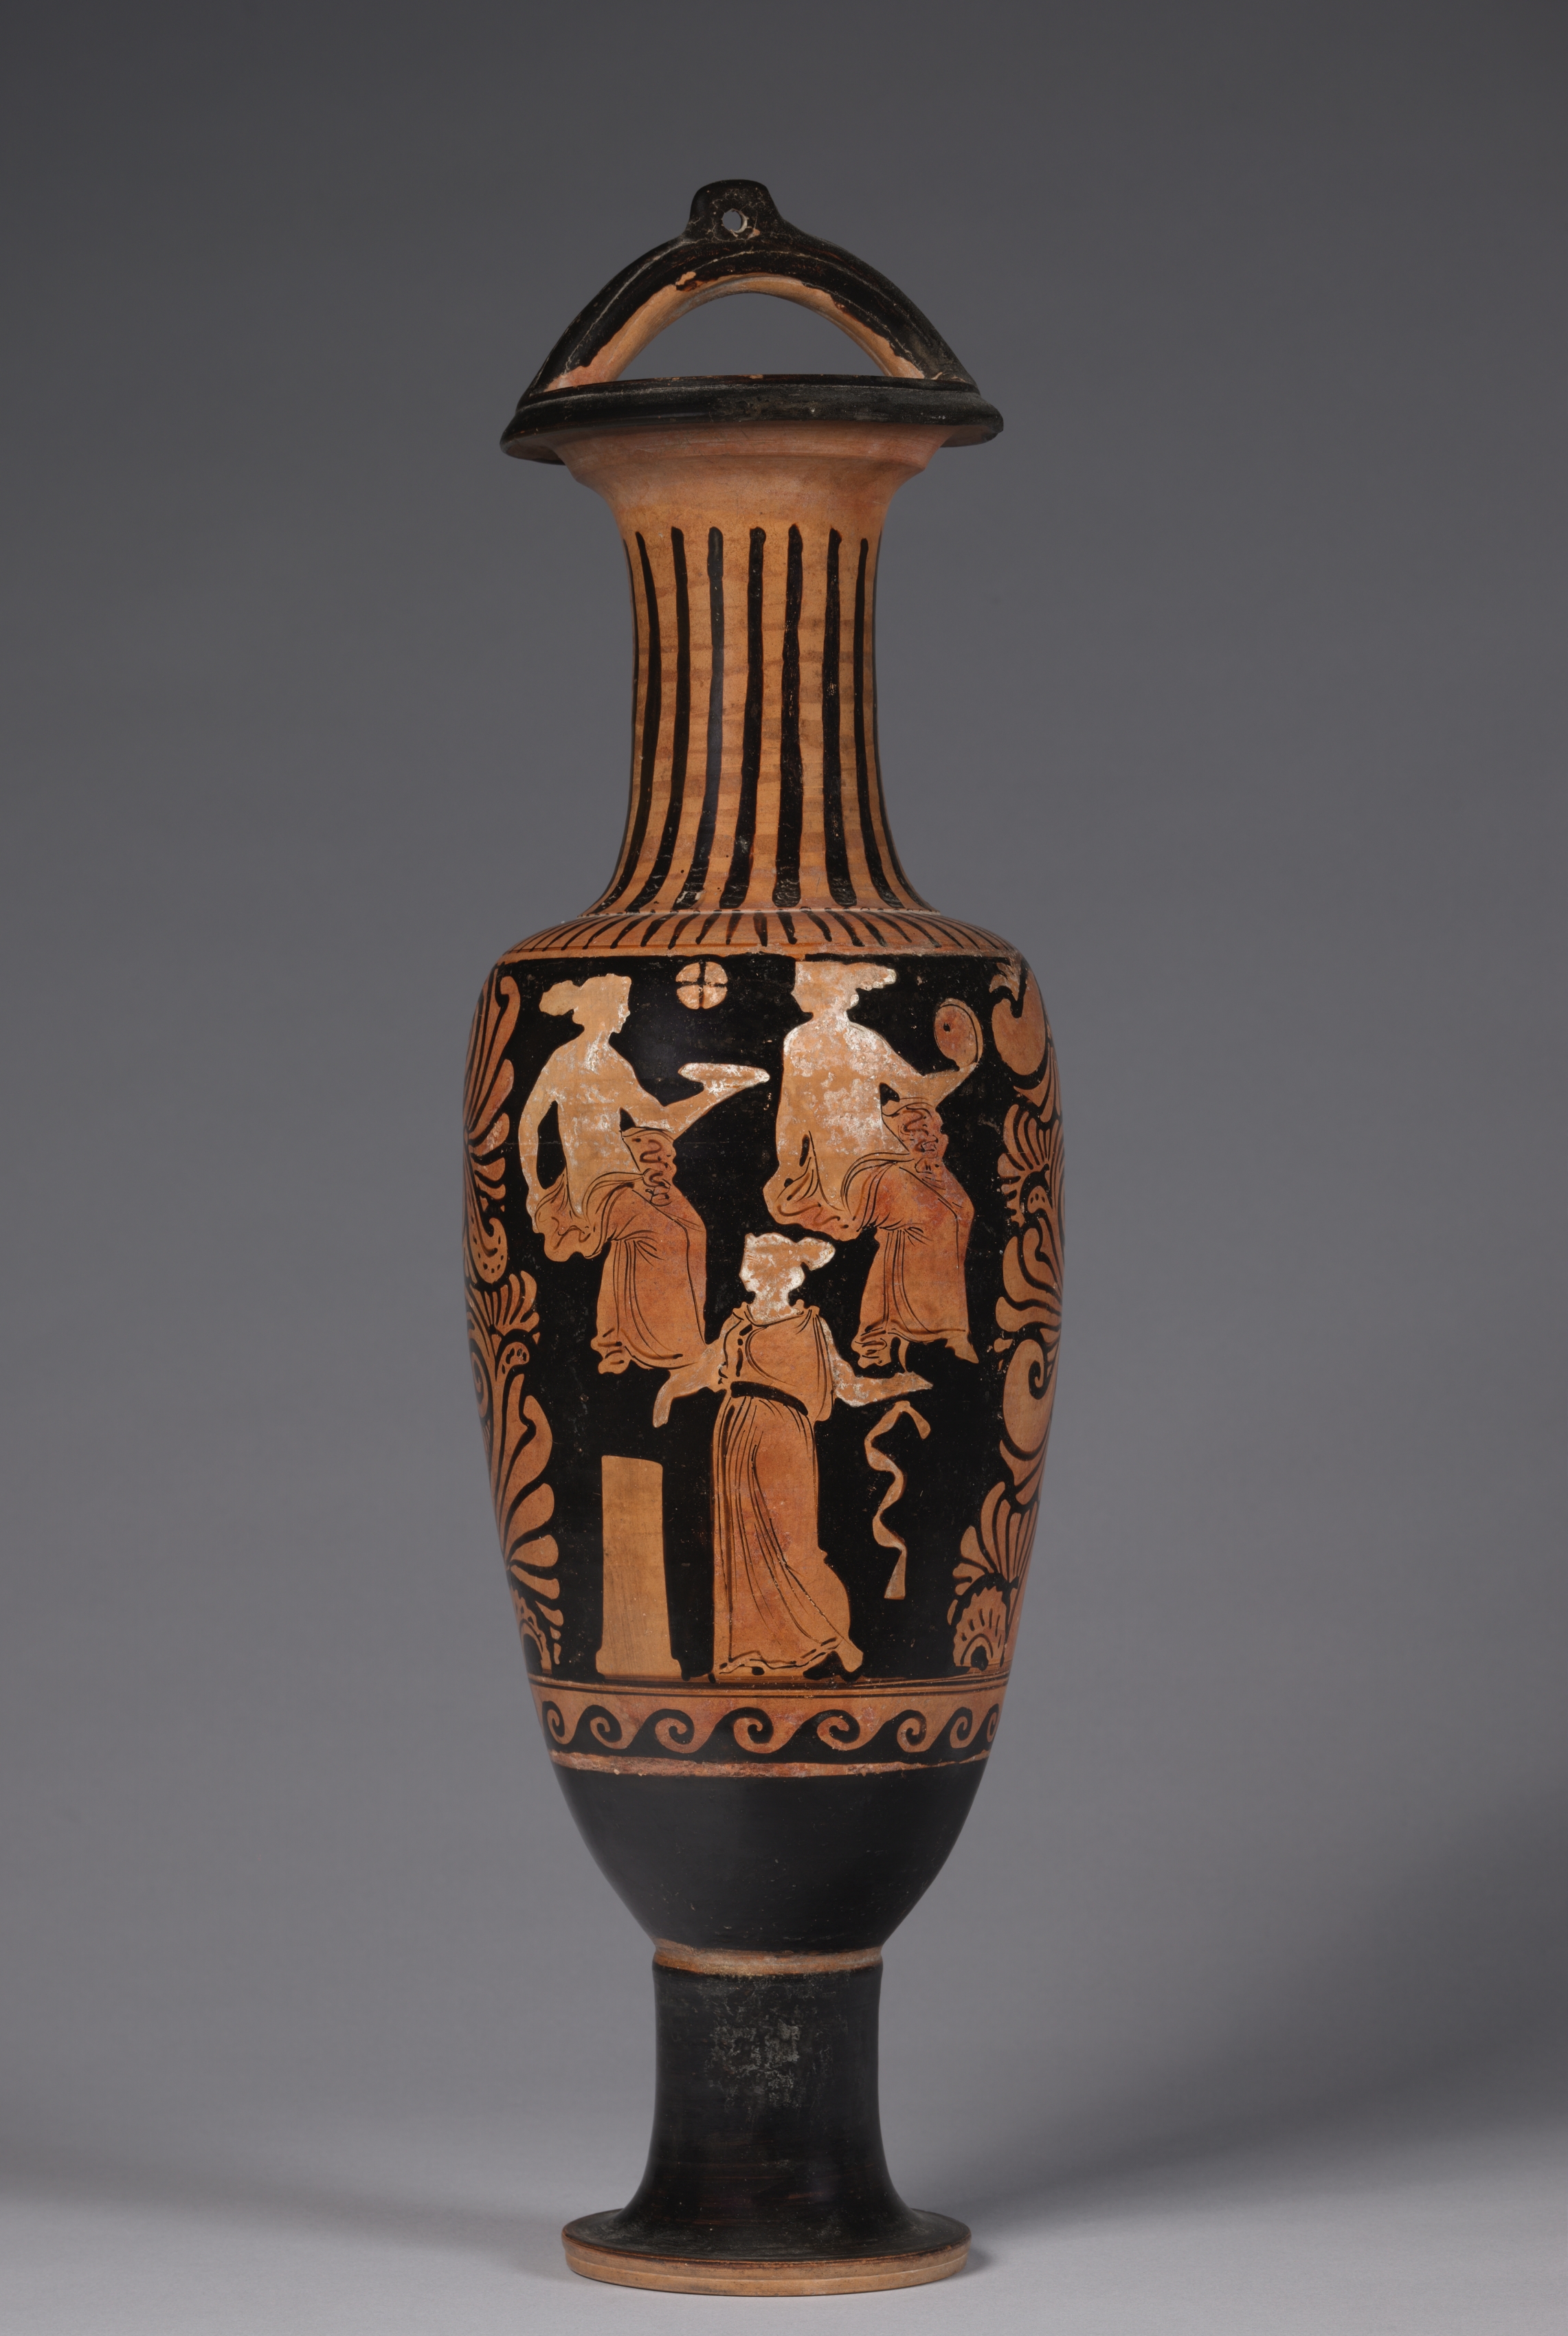 Red-Figure Bail Amphora (Storage Vessel): Draped Women